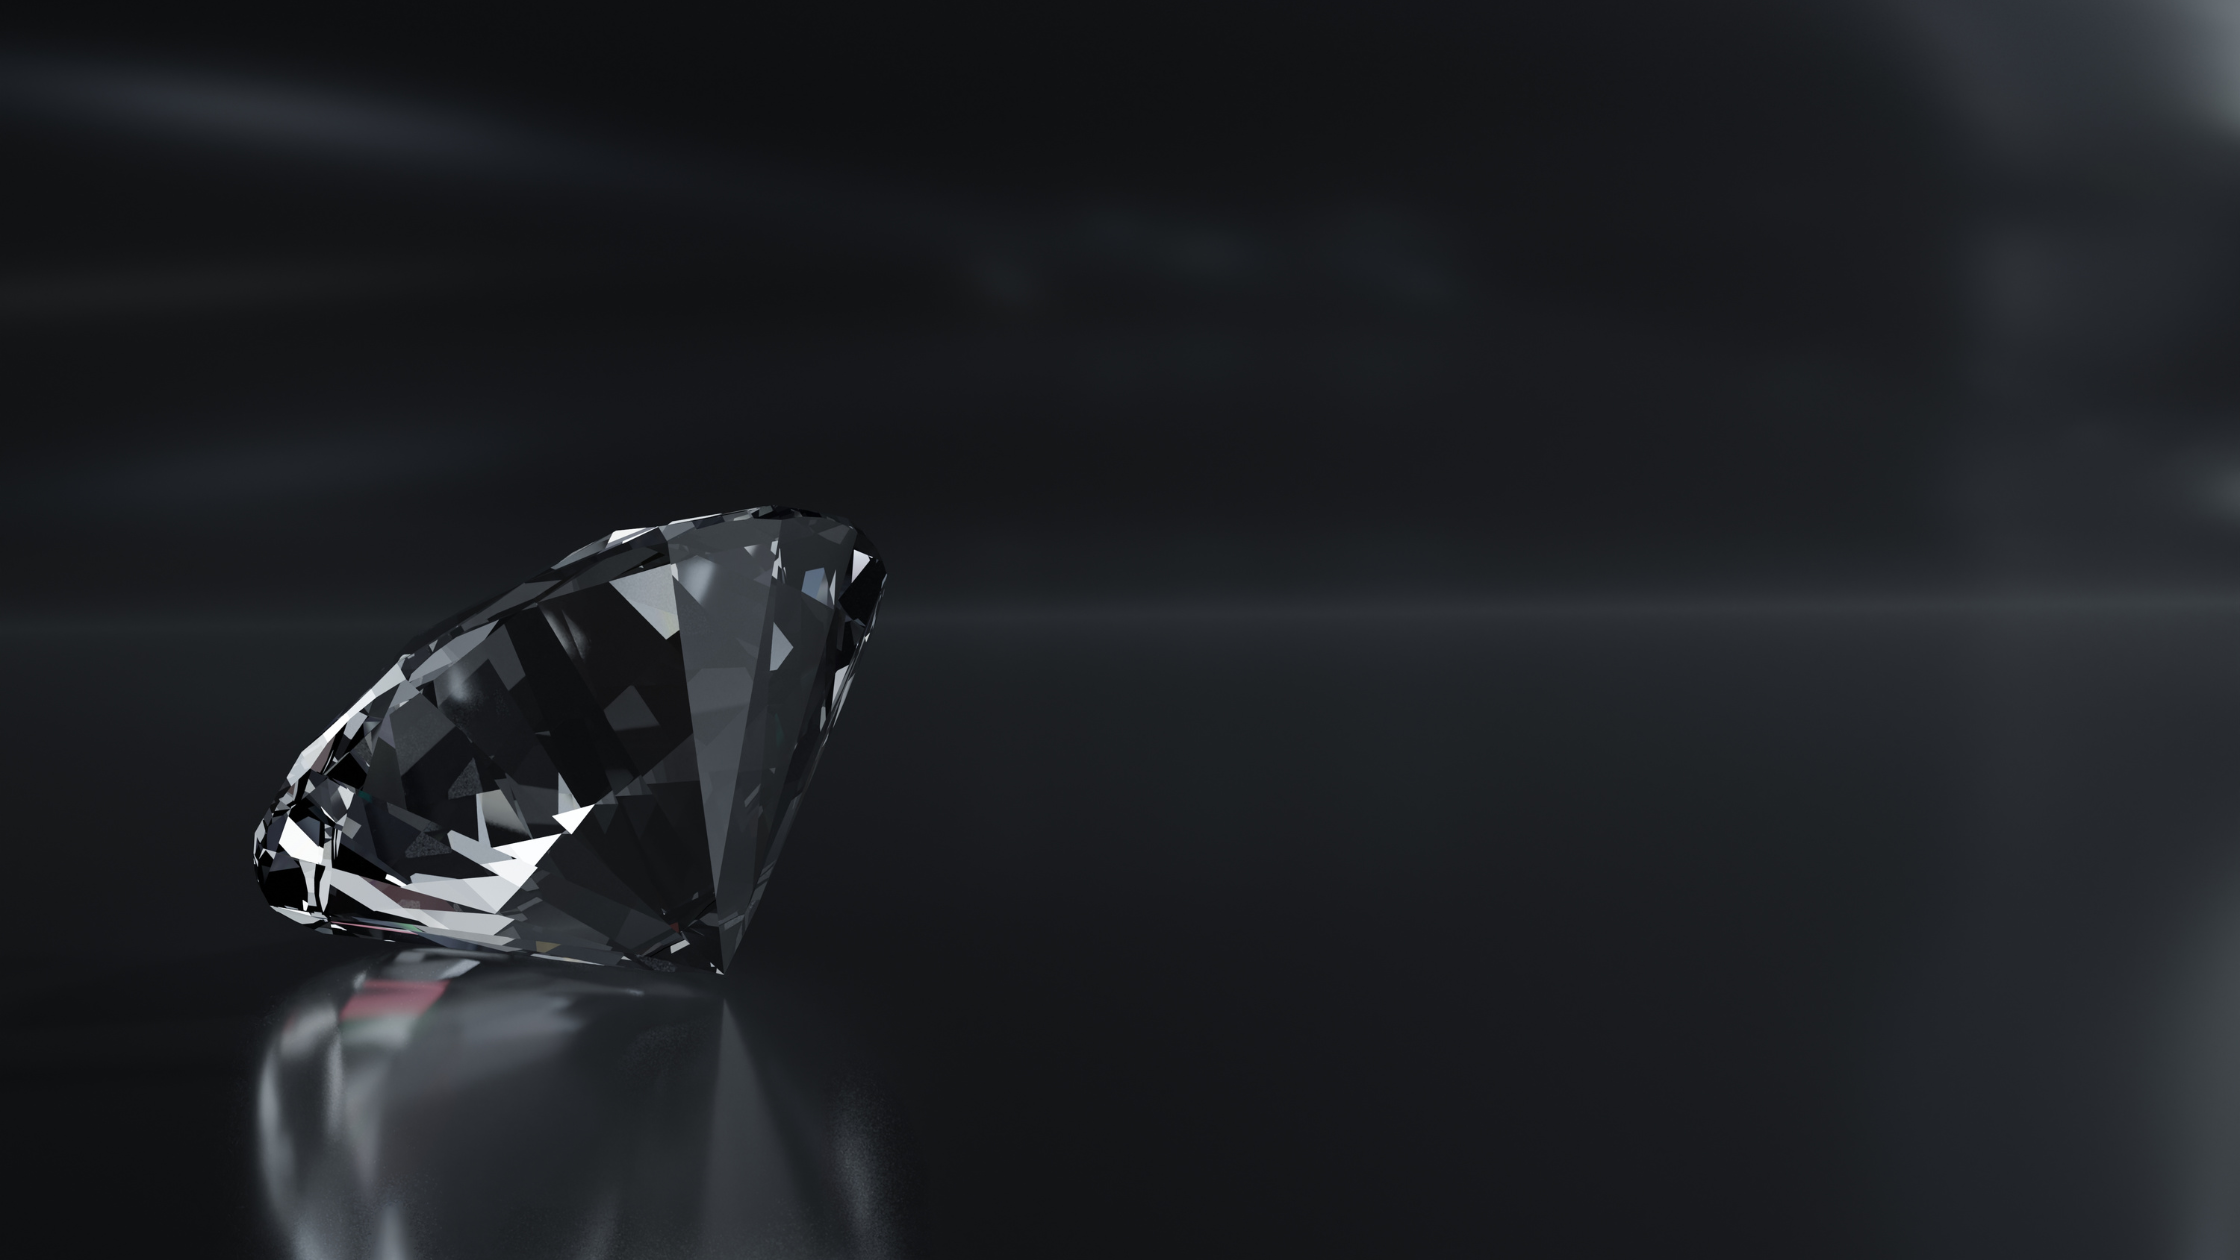 Best Diamond Alternatives